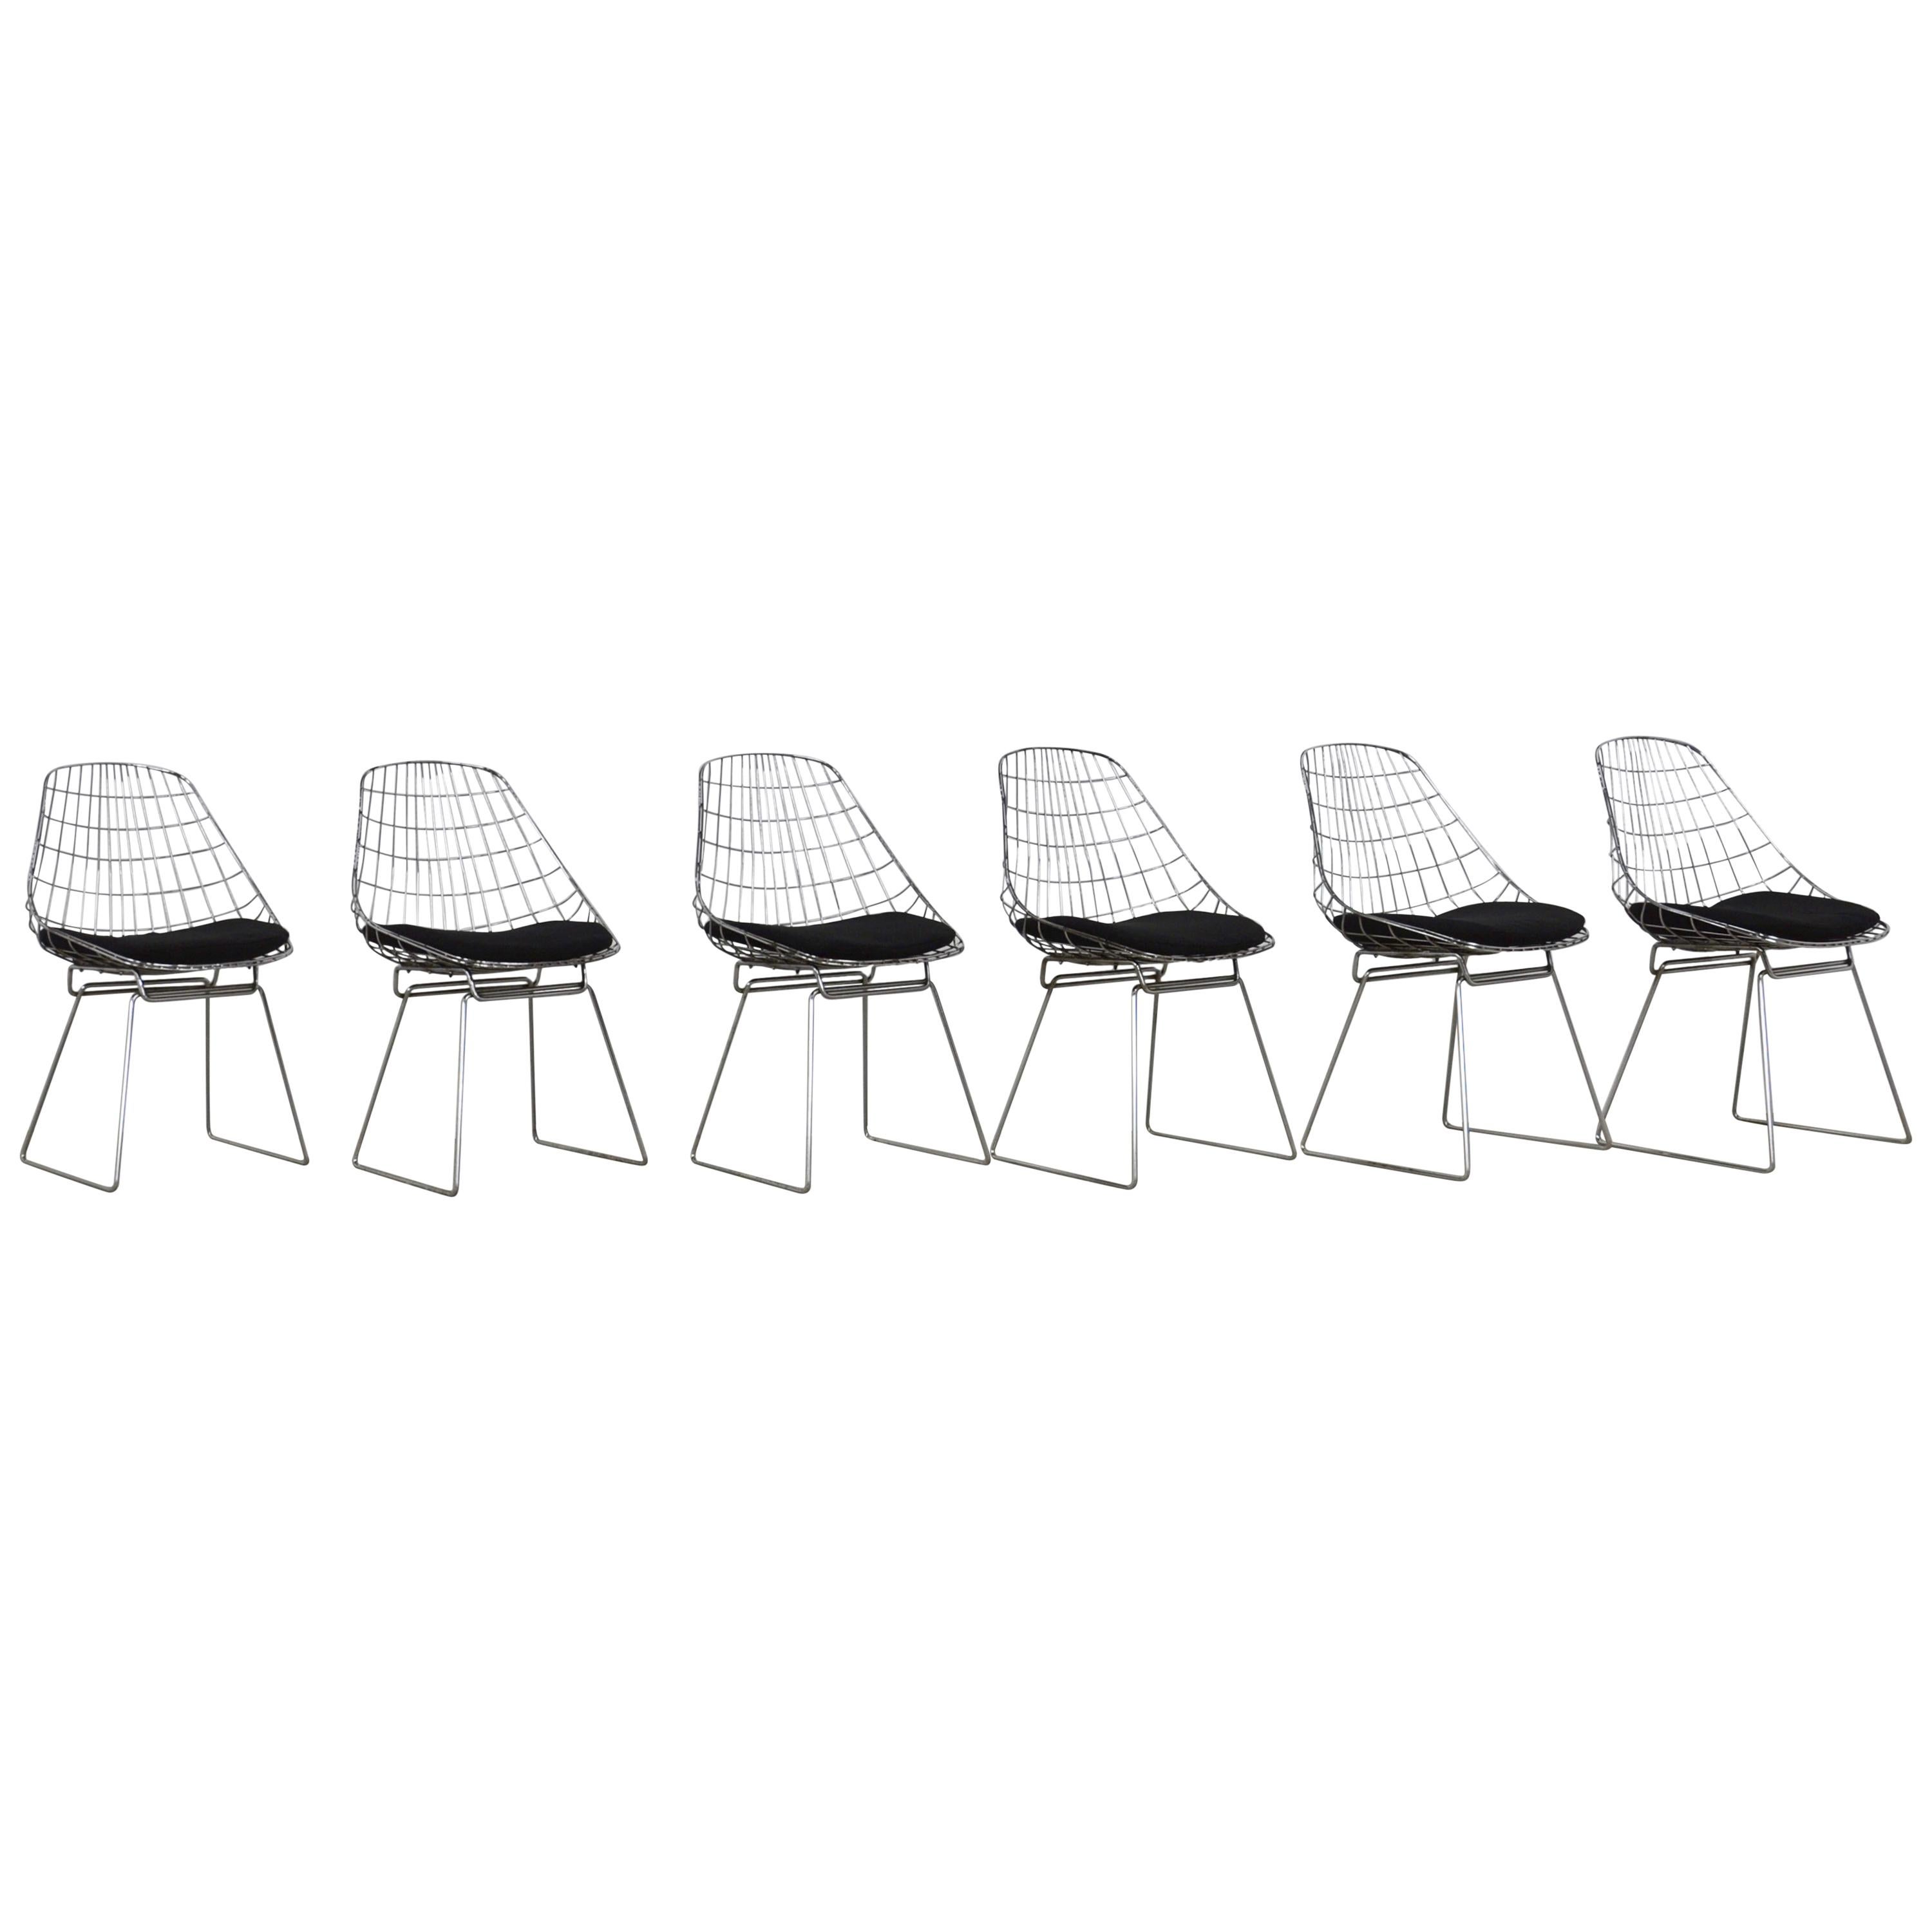 Chairs Wire SM05 by Cees Braakman & Adriaan Dekker for Pastoe, 1958